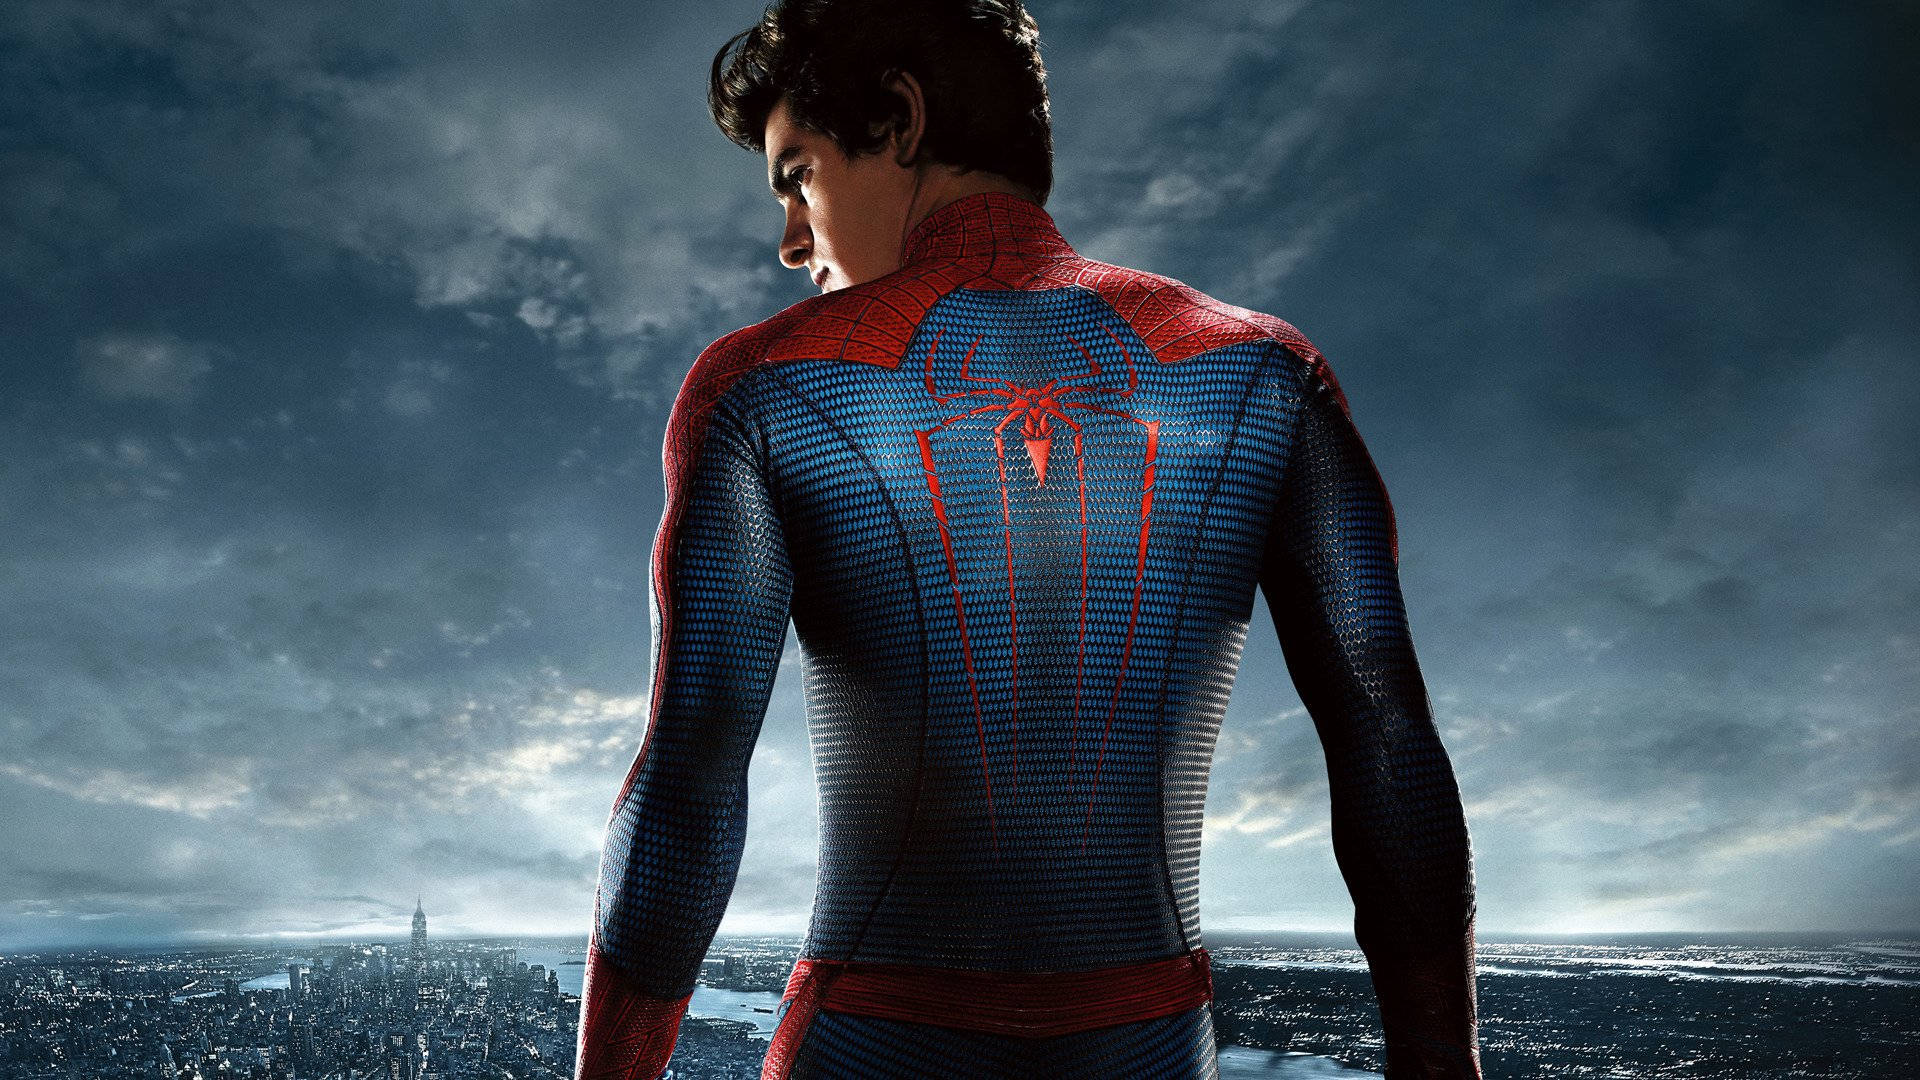 Andrew Garfield The Amazing Spider-man Background